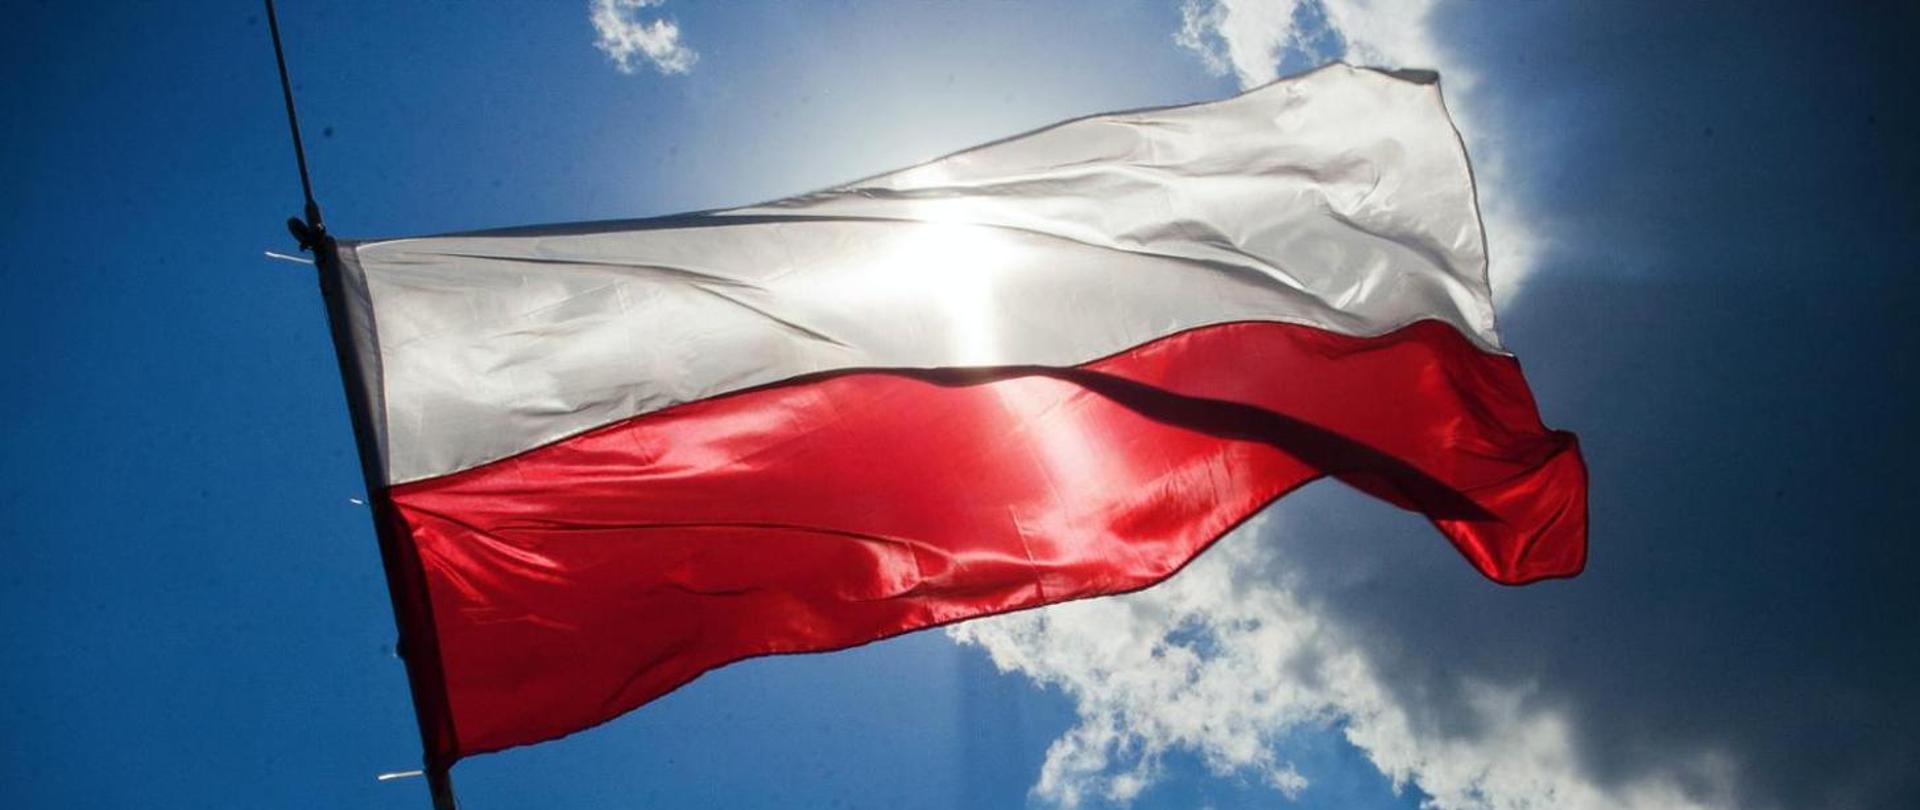 polska flaga na tle błękitnego nieba